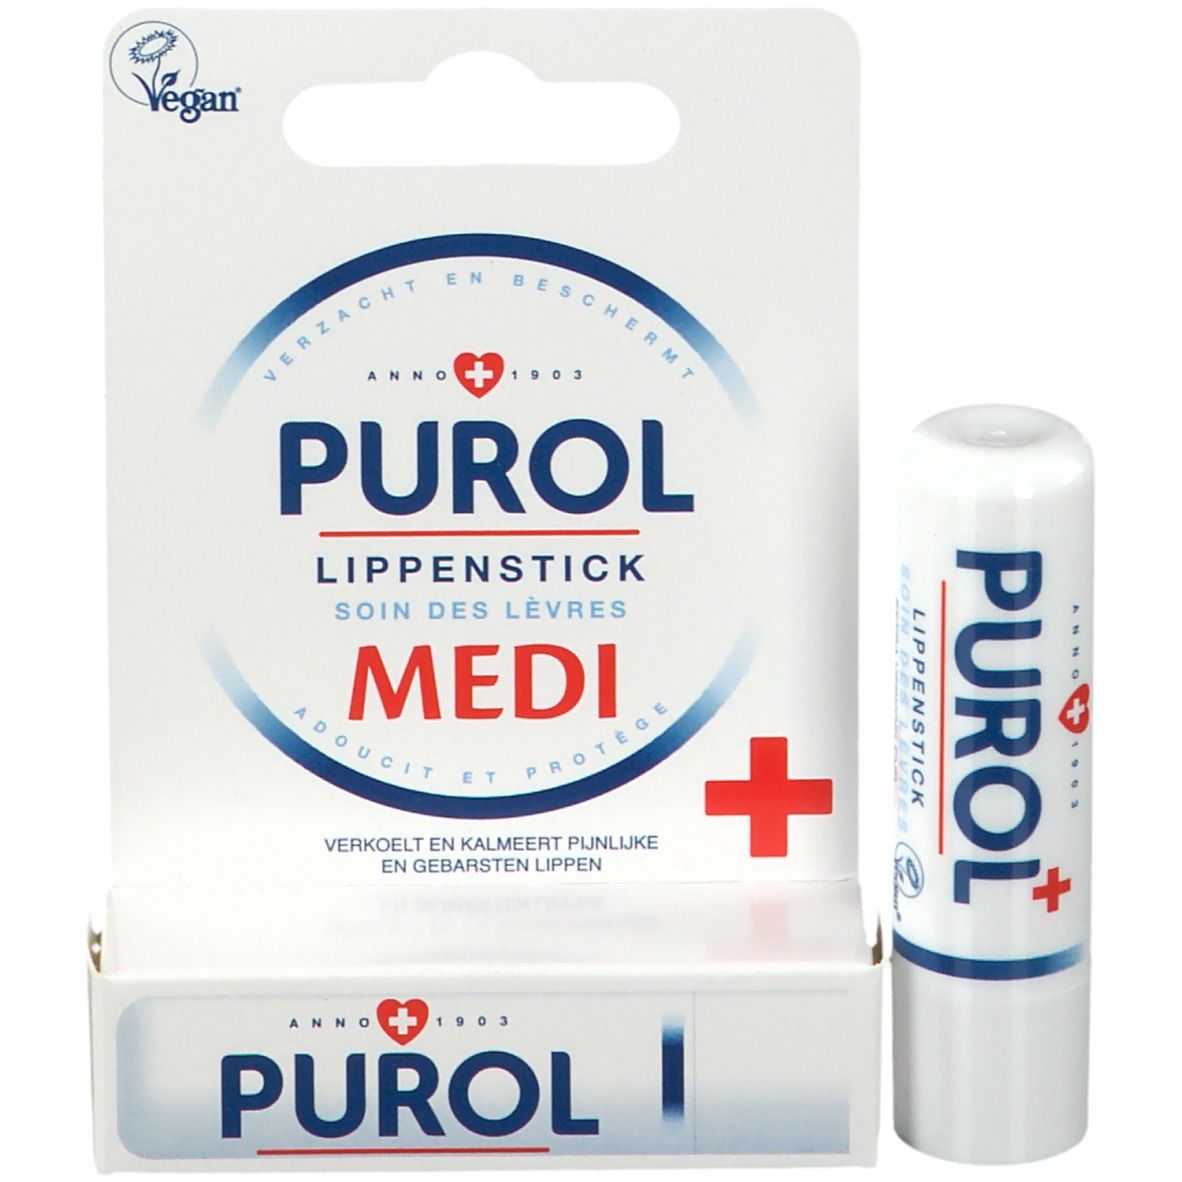 Purol Lipstick Medi Plus Gesprongen Lippen